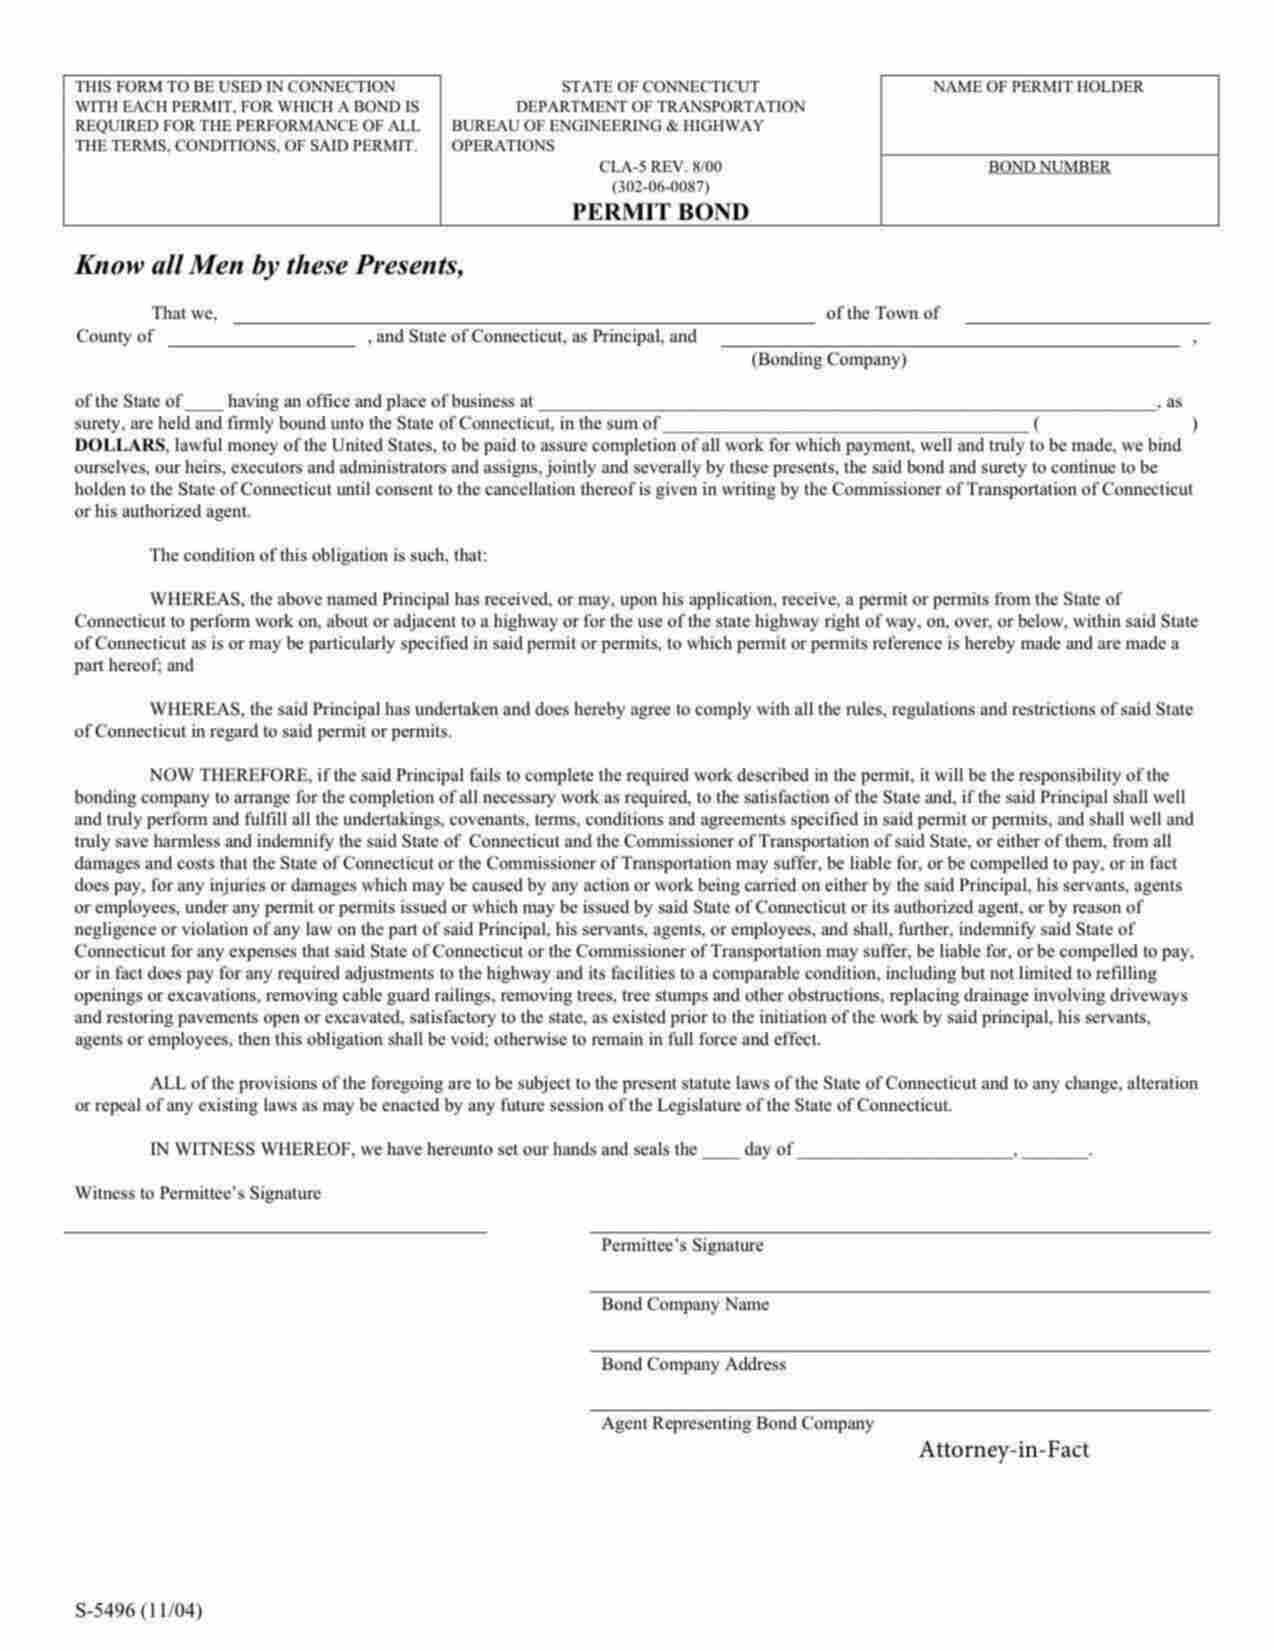 Connecticut Highway Permit Bond Form